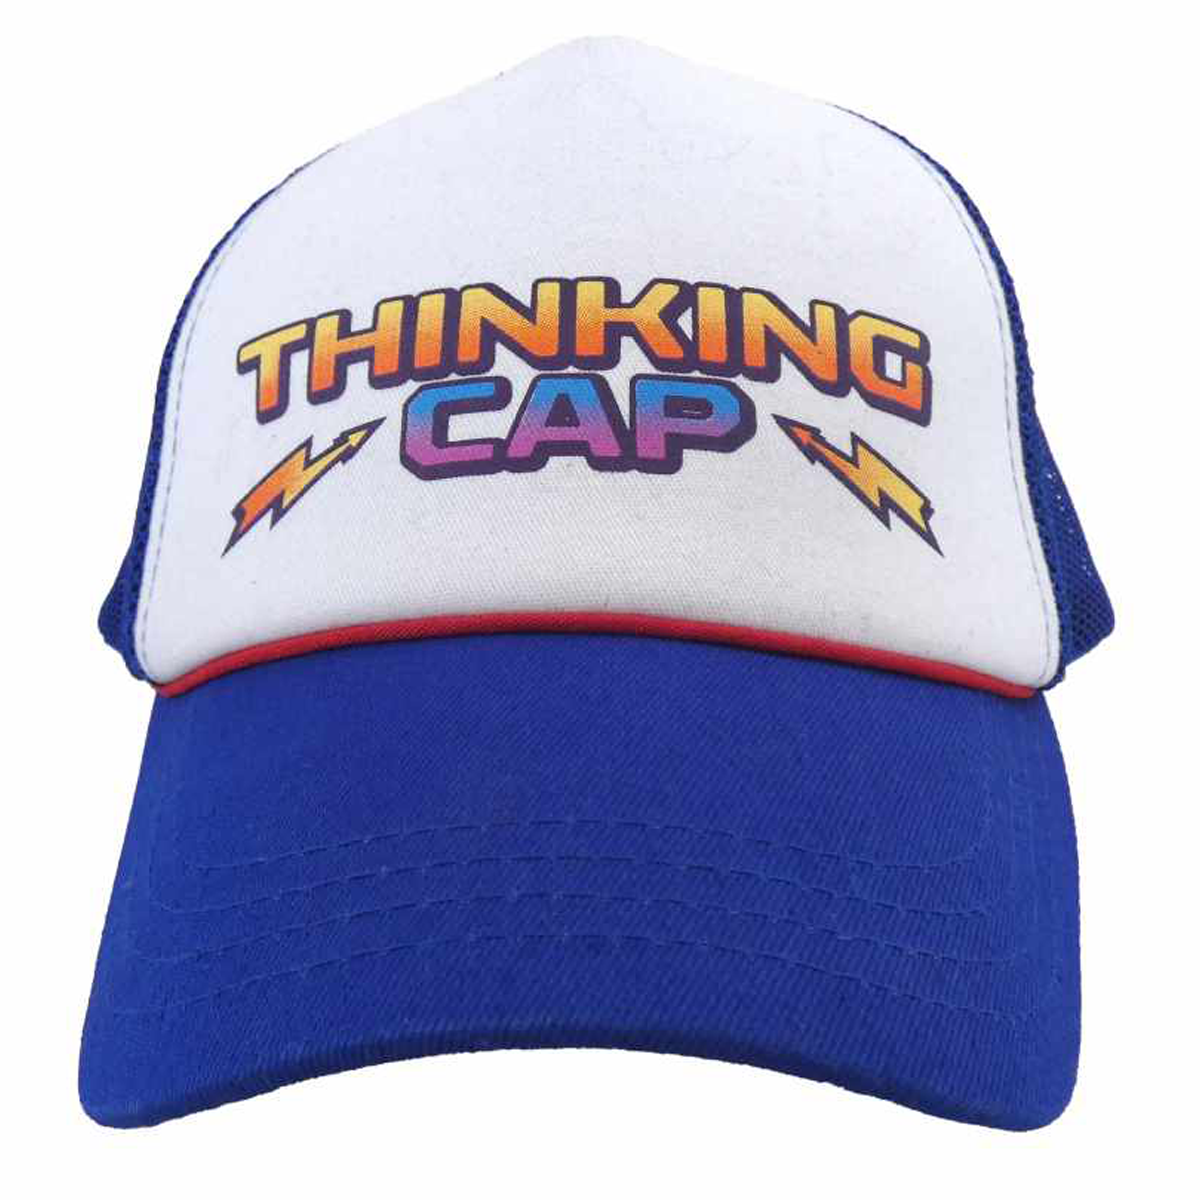 Stranger Things cap – Thinking Cap